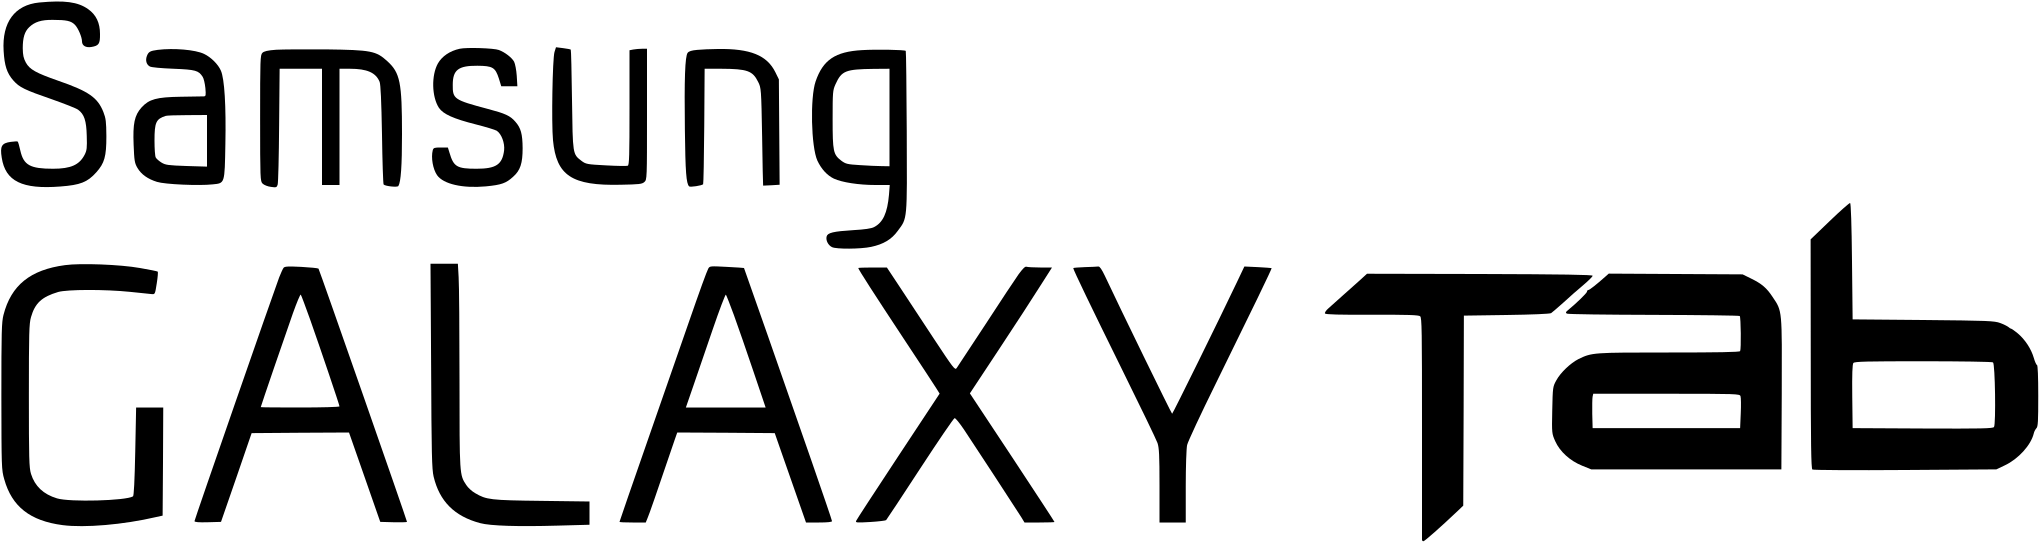 Galaxy Tab Logo - Samsung Galaxy Tab Font Clipart (2200x753), Png Download